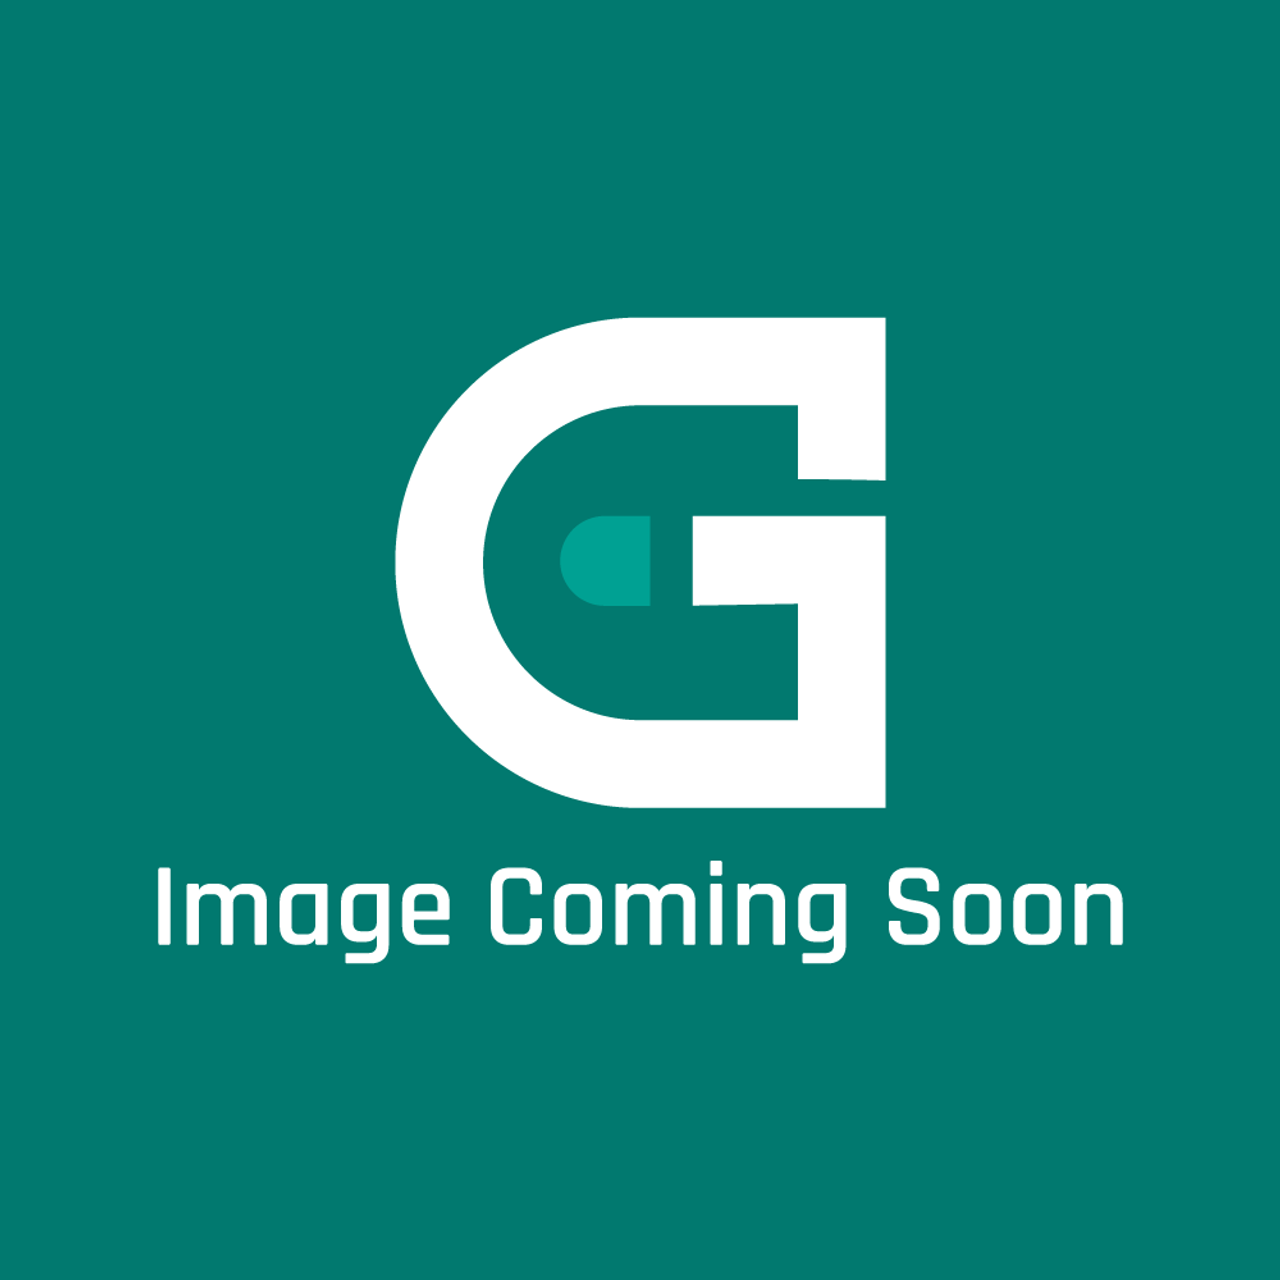 GE Appliances 12X94 - 104161-04 Comp Apg029Kac R410A 230V-1 - Image Coming Soon!